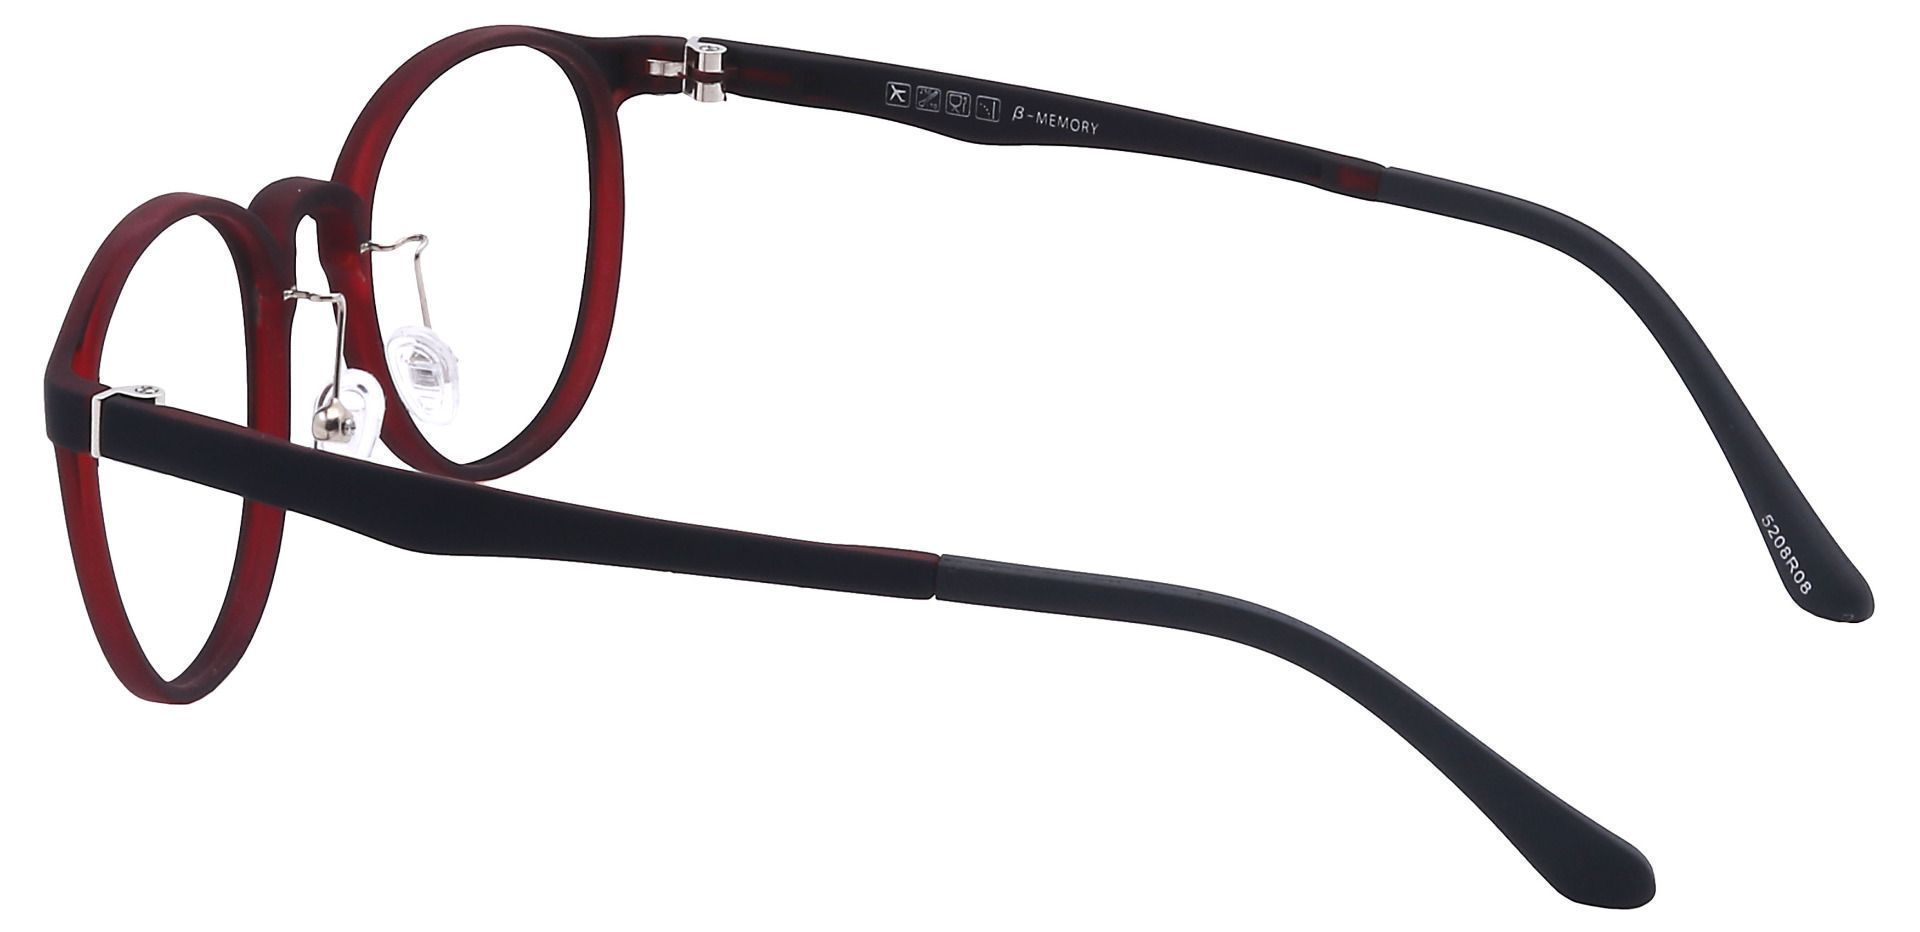 Nimbus Oval Eyeglasses Frame - Red